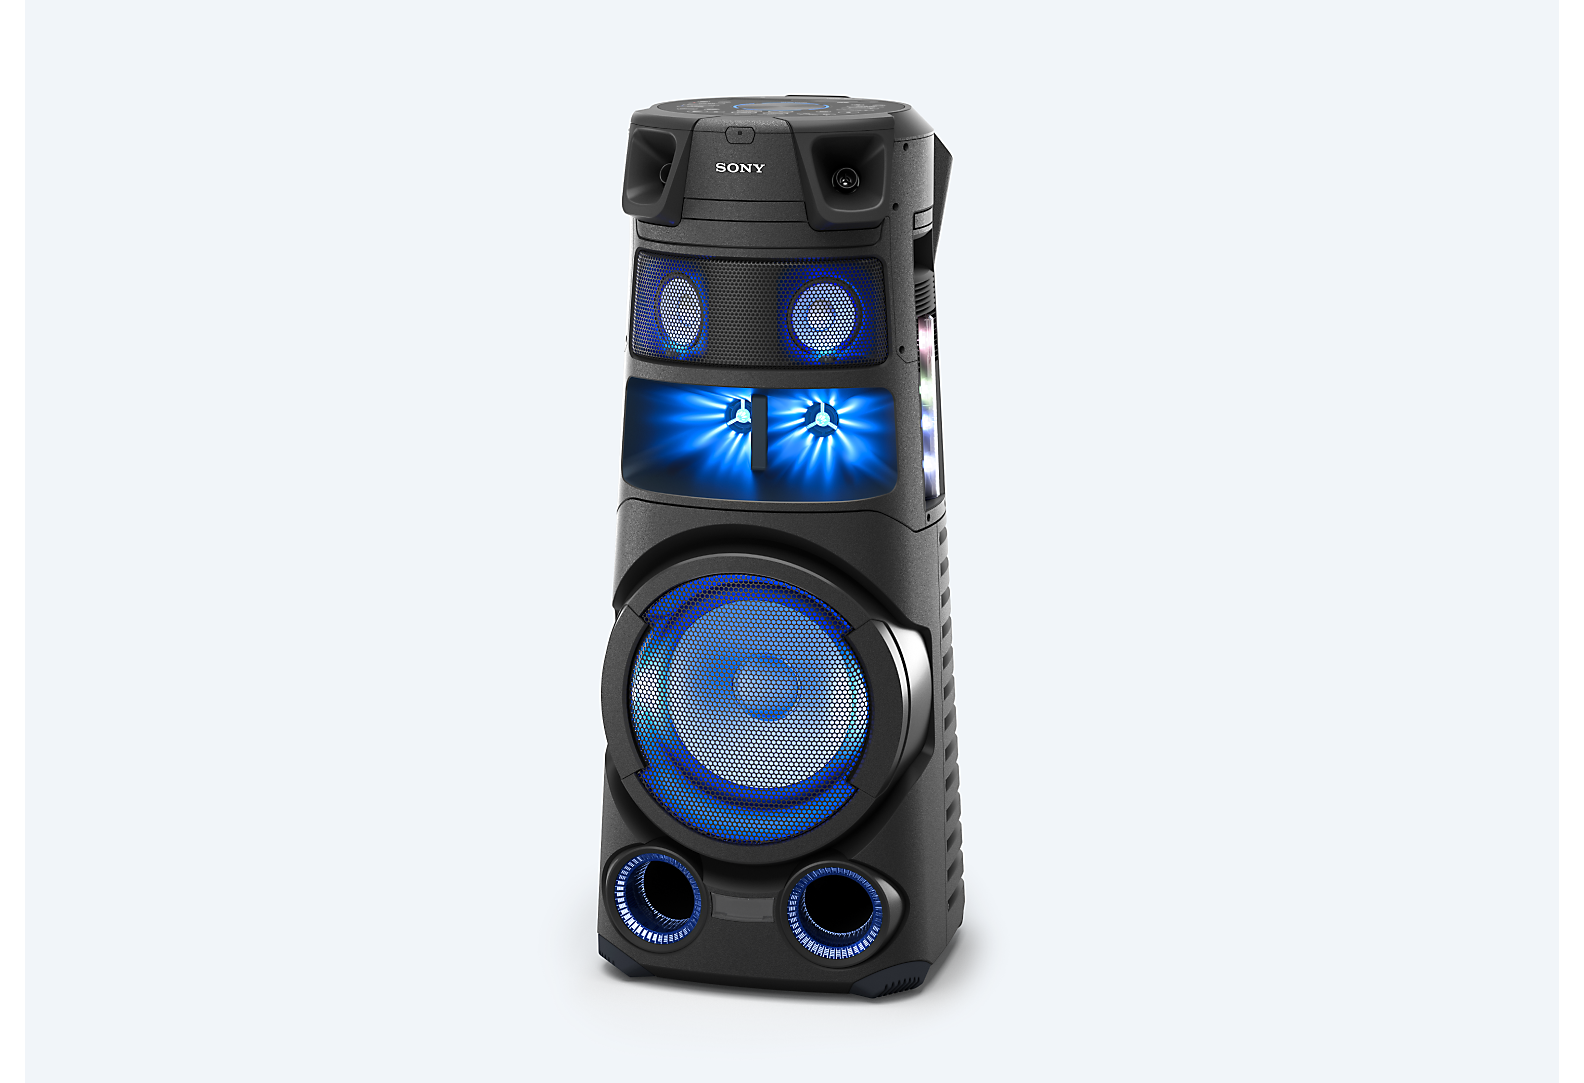 Sistem audio high power Sony dengan latar belakang biru